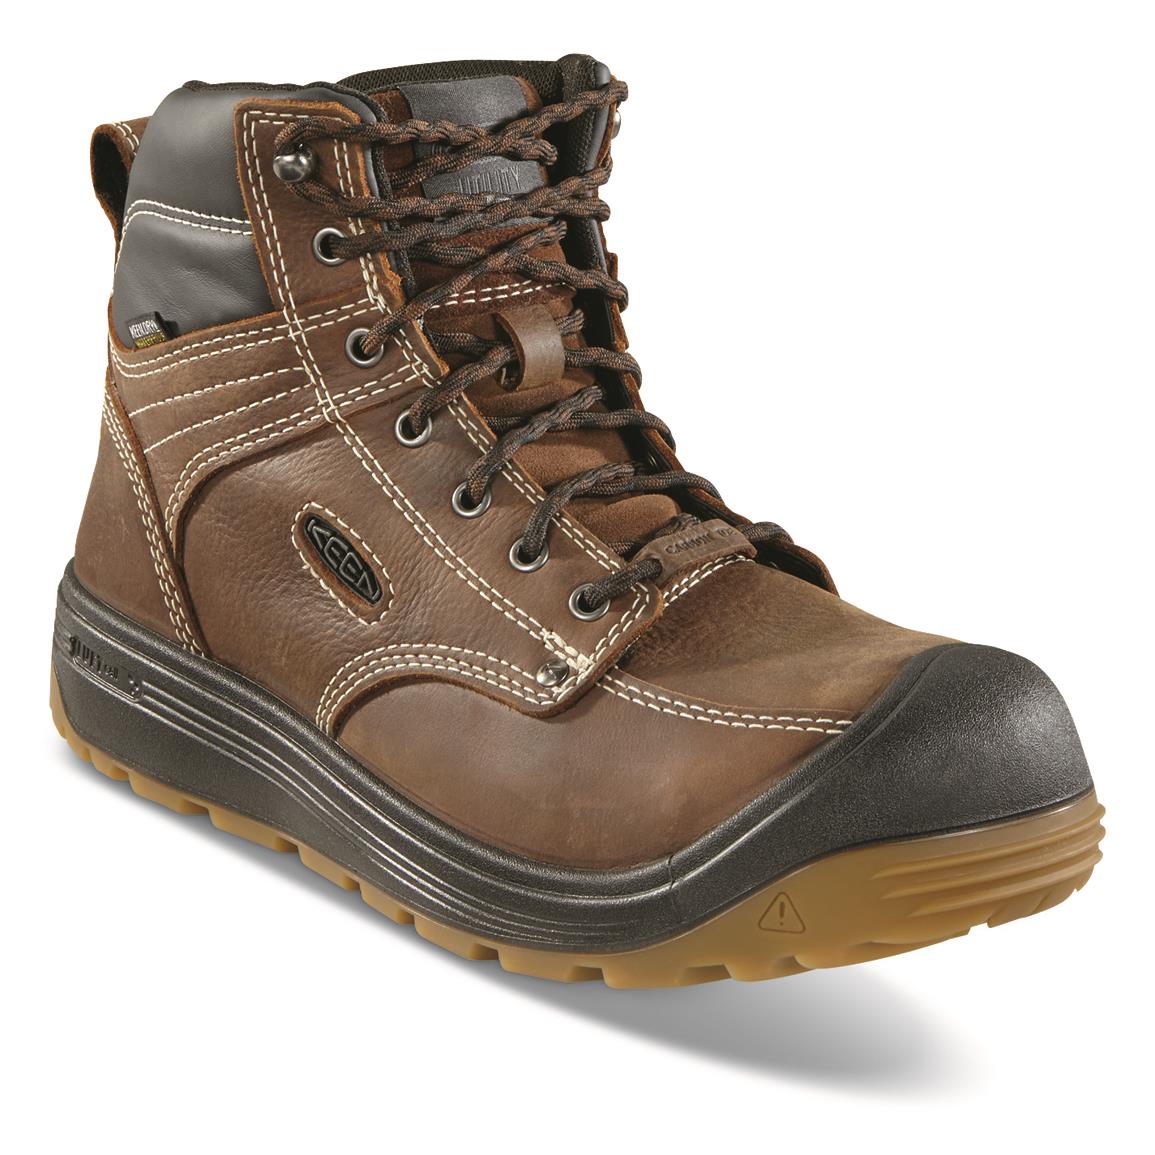 KEEN Utility Men's Fort Wayne 6" Waterproof Carbon-fiber Toe Work Boots, Dark Earth/gum